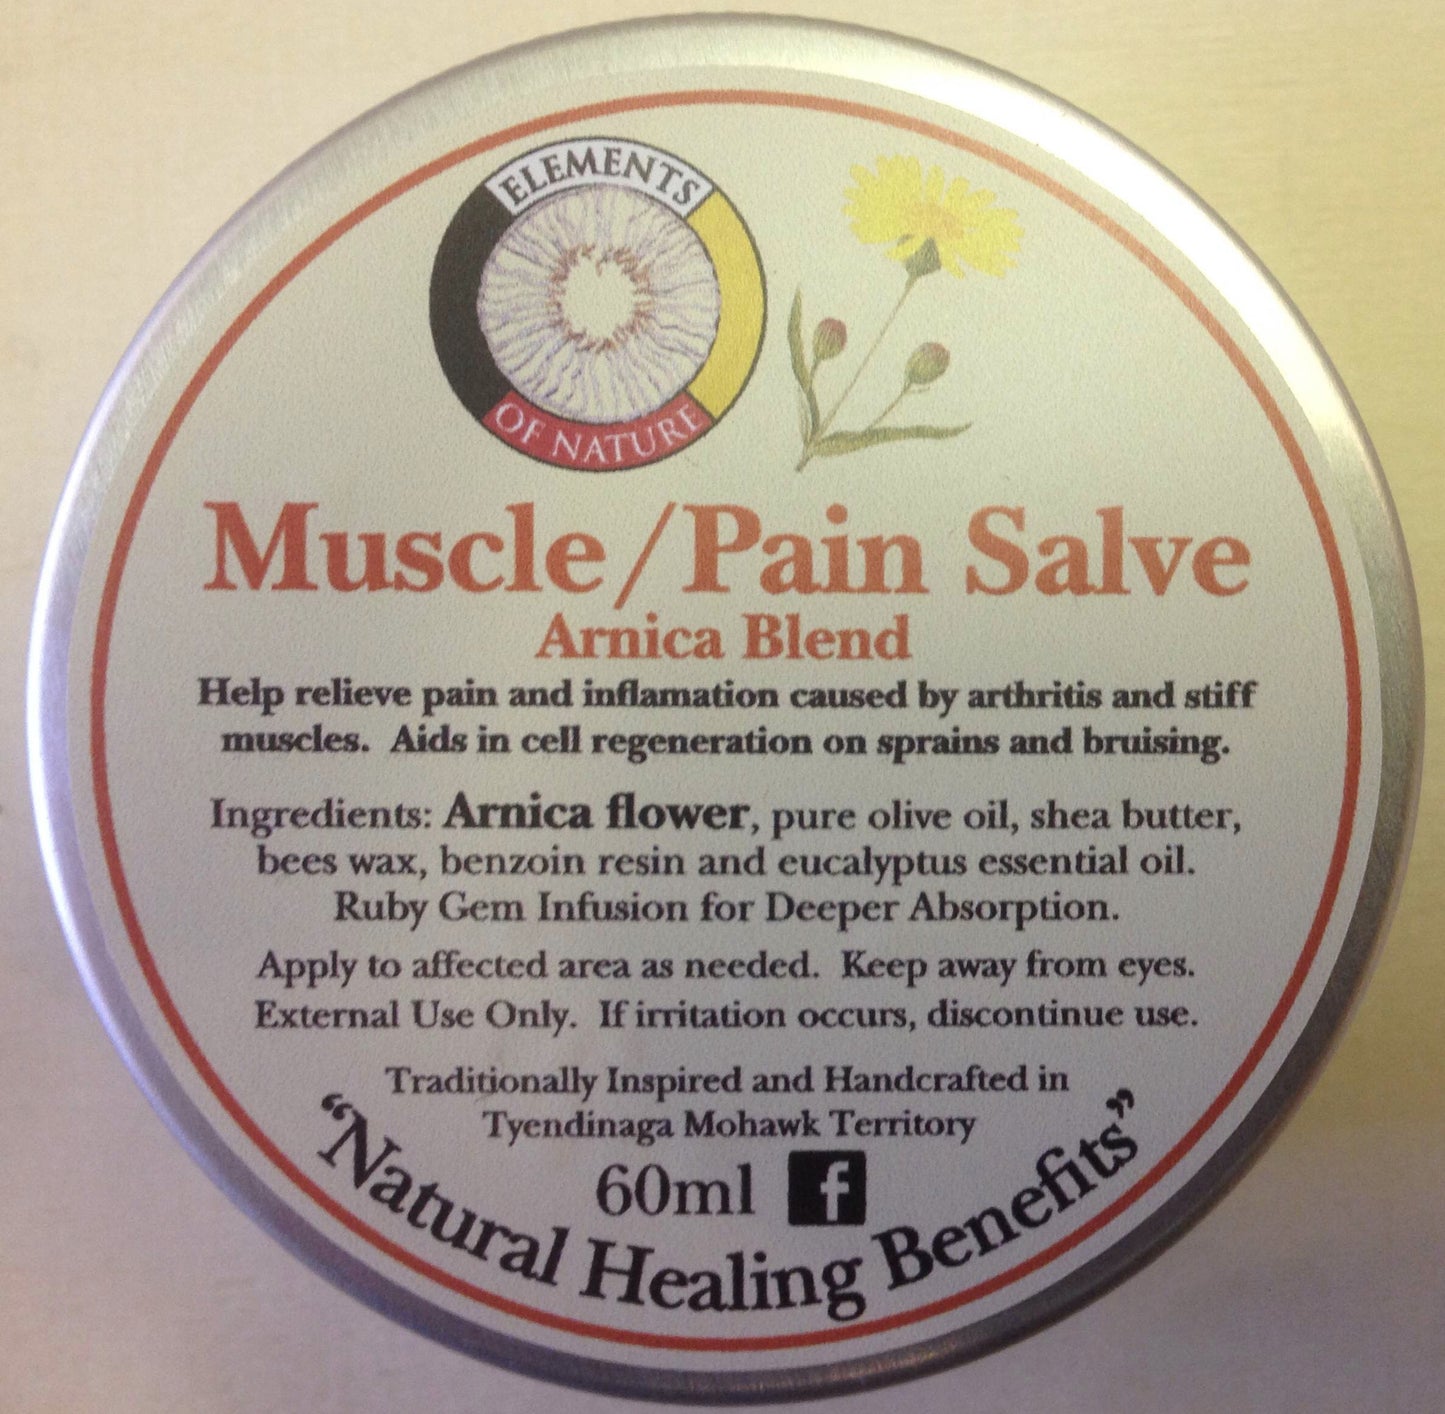 Muscle/Pain Salve